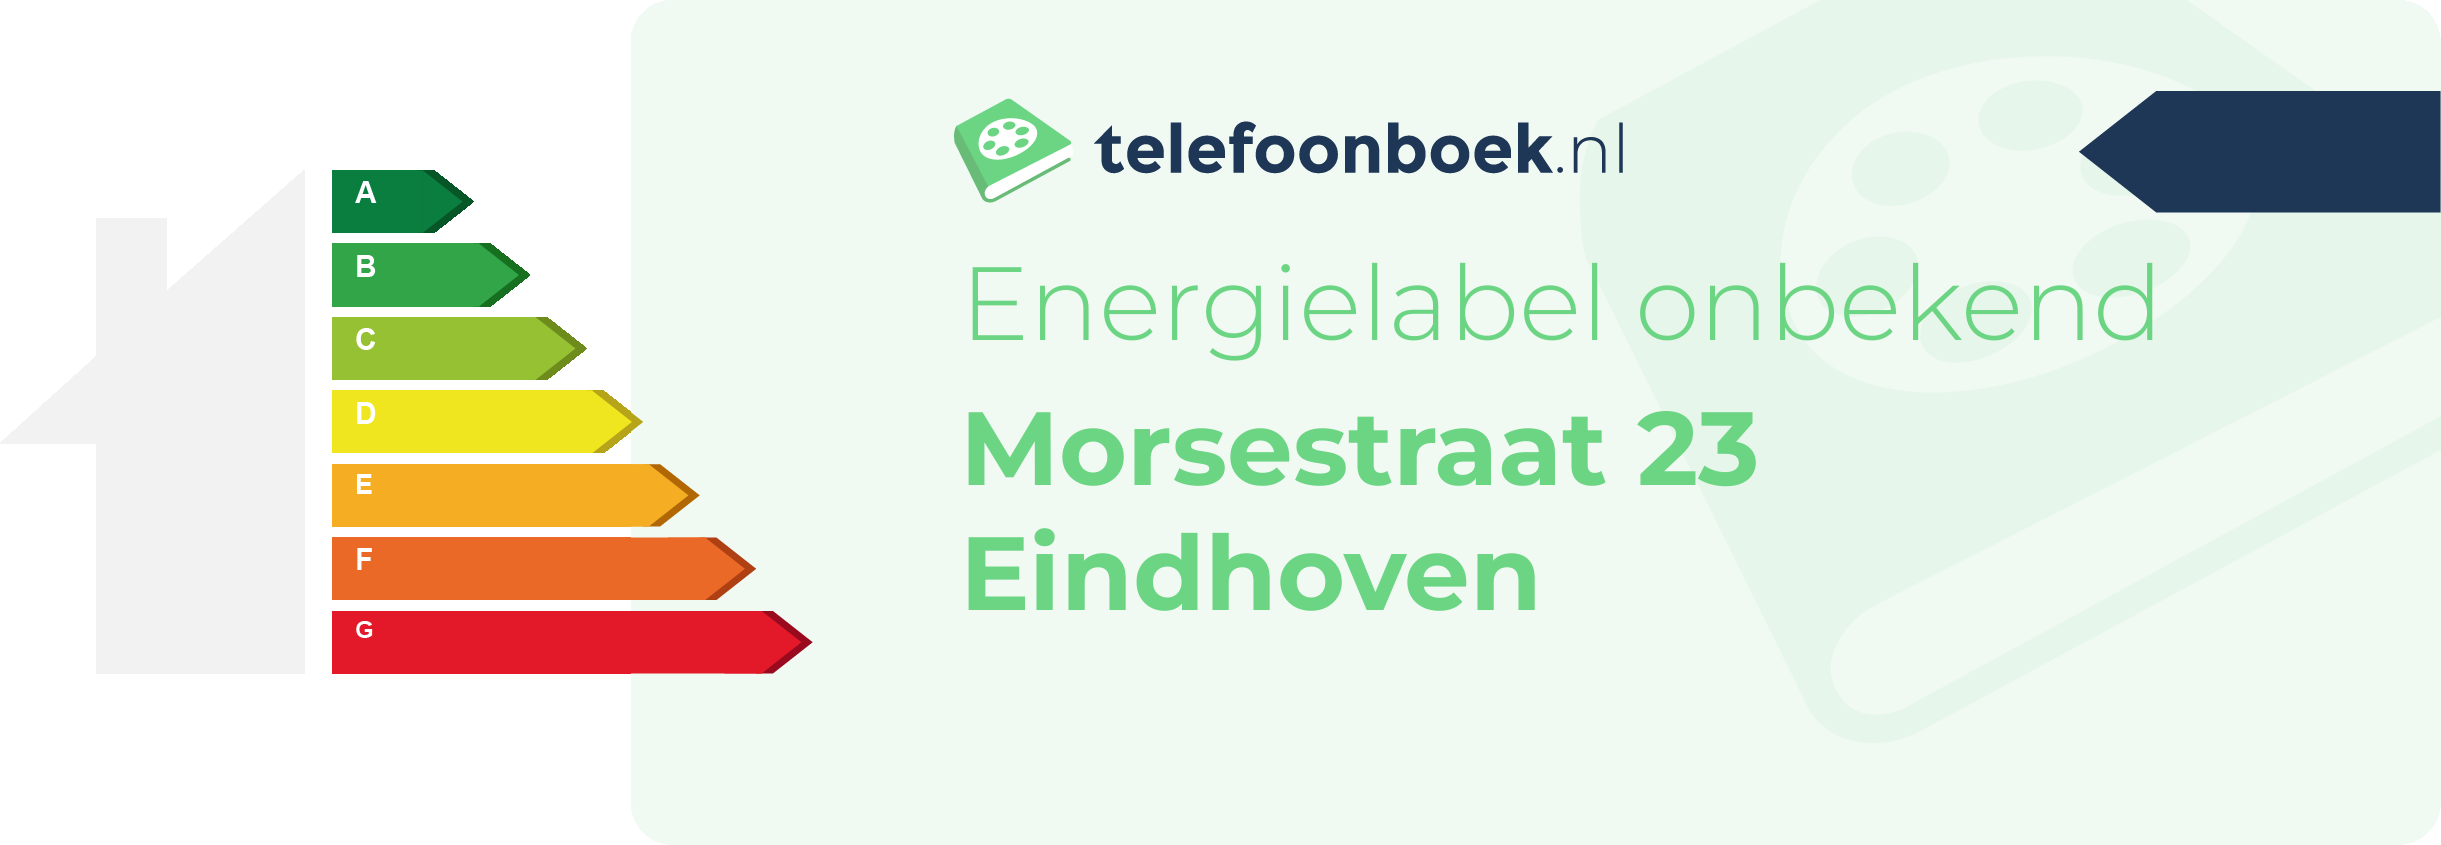 Energielabel Morsestraat 23 Eindhoven